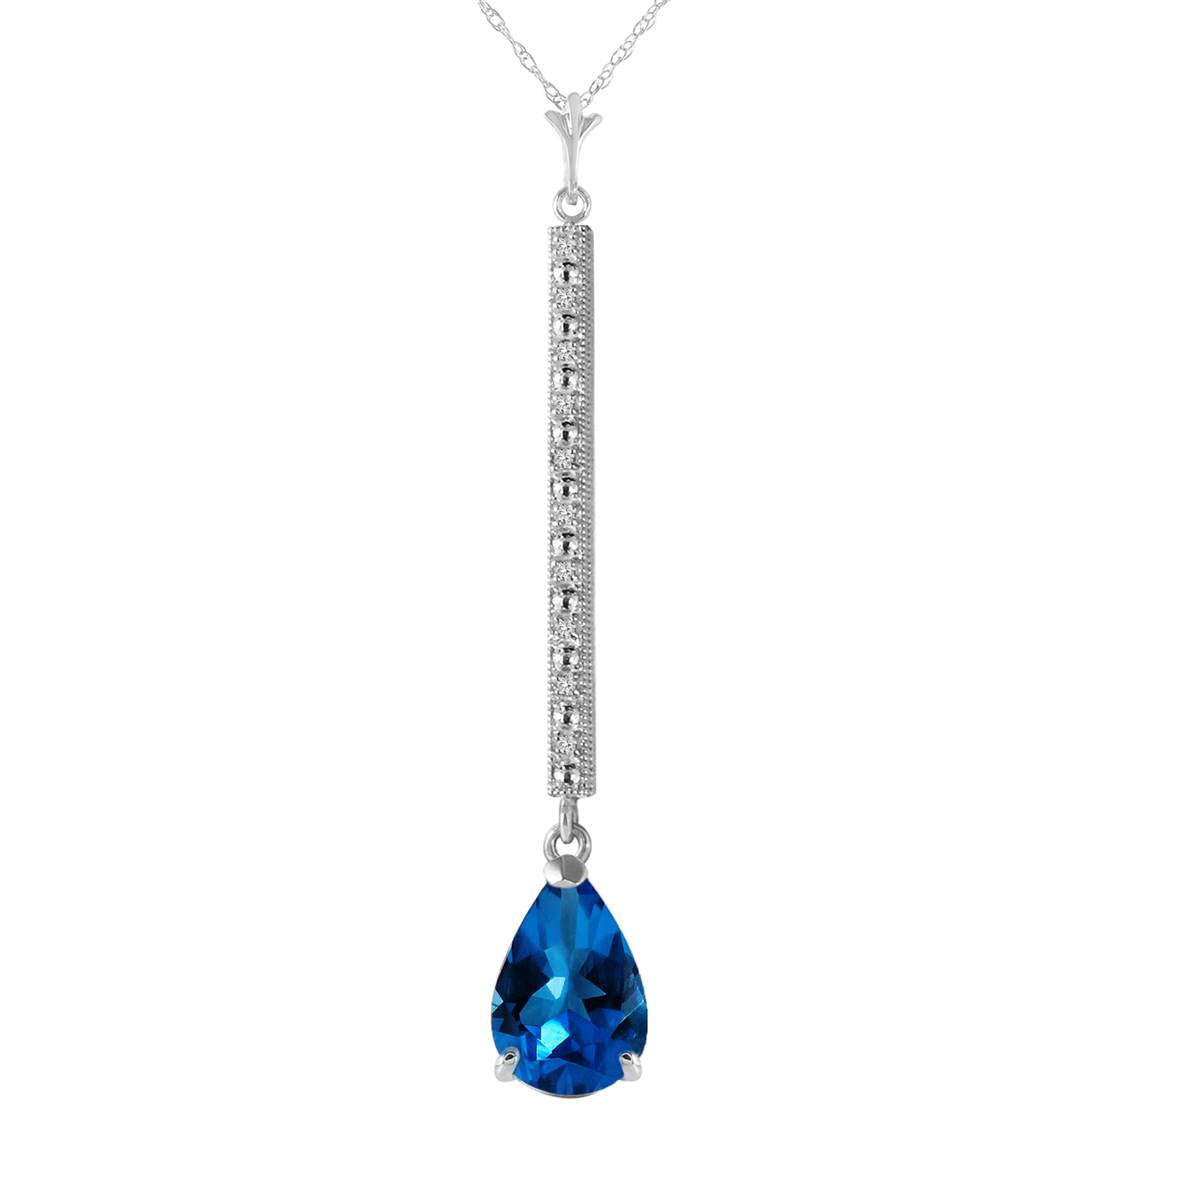 1.8 Carat 14K Solid White Gold Necklace Diamond Blue Topaz